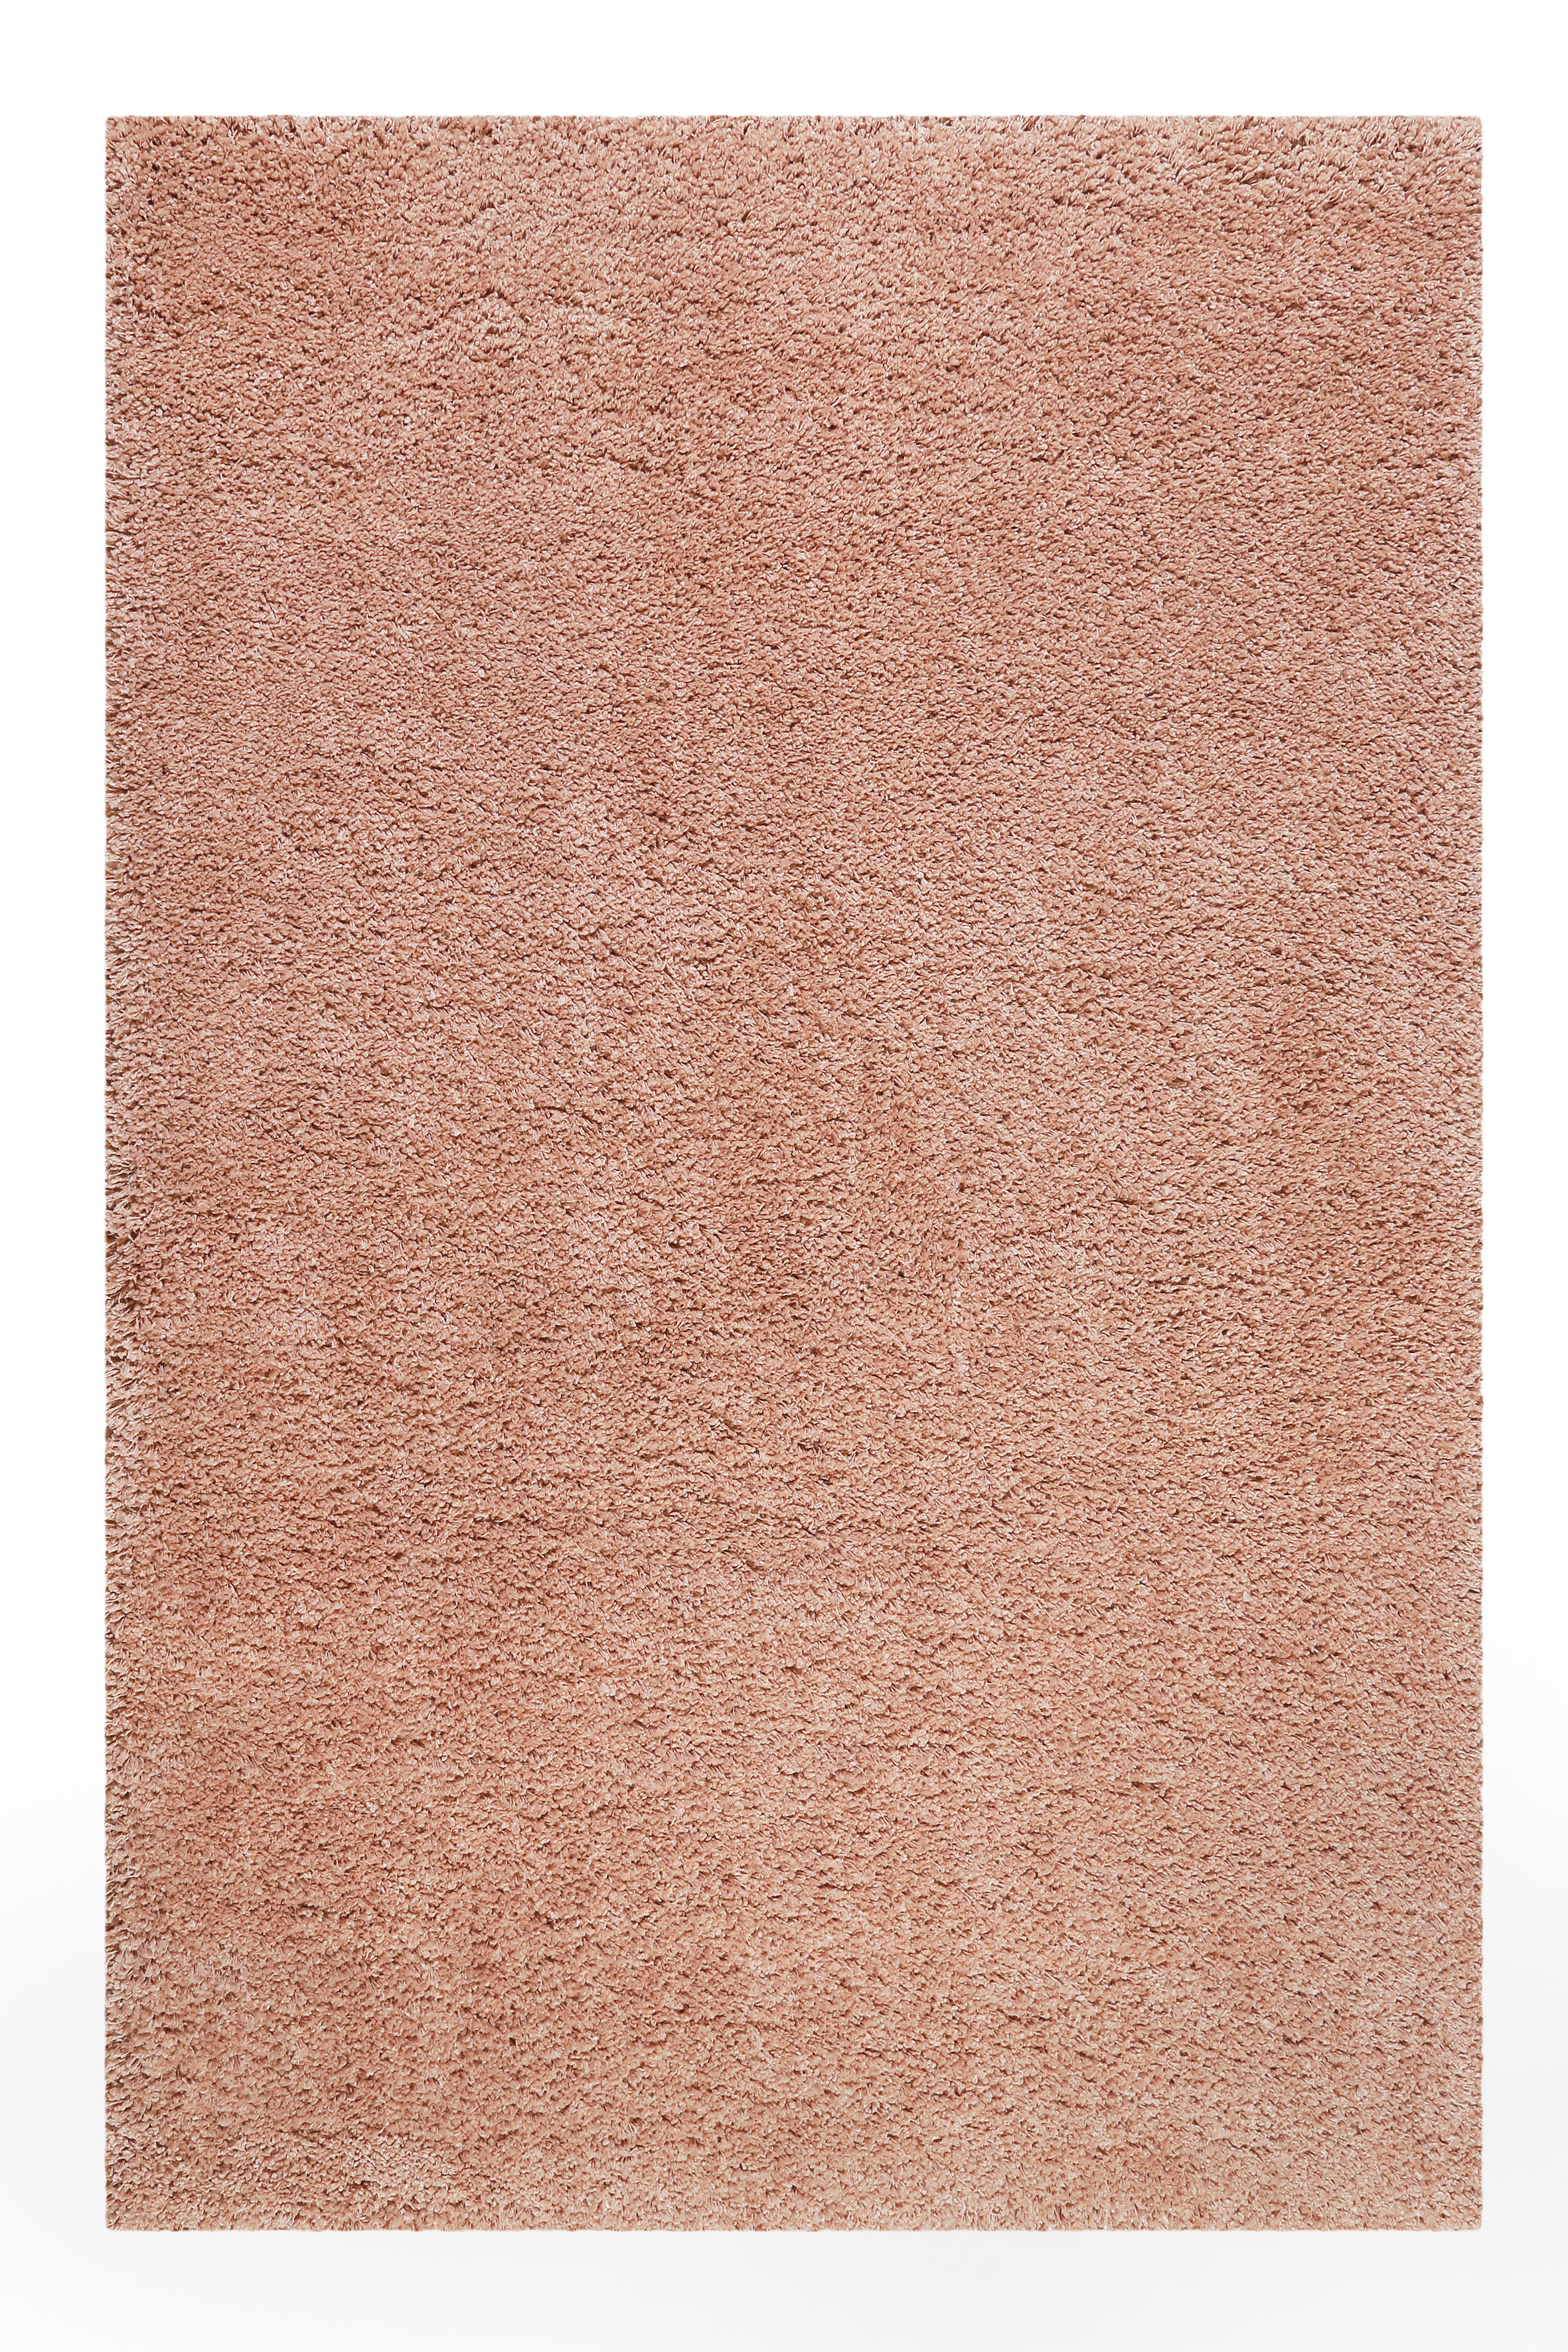 WEBTEPPICH  70/140 cm  Rosa, Hellrosa   - Hellrosa/Rosa, KONVENTIONELL, Textil (70/140cm) - Esprit